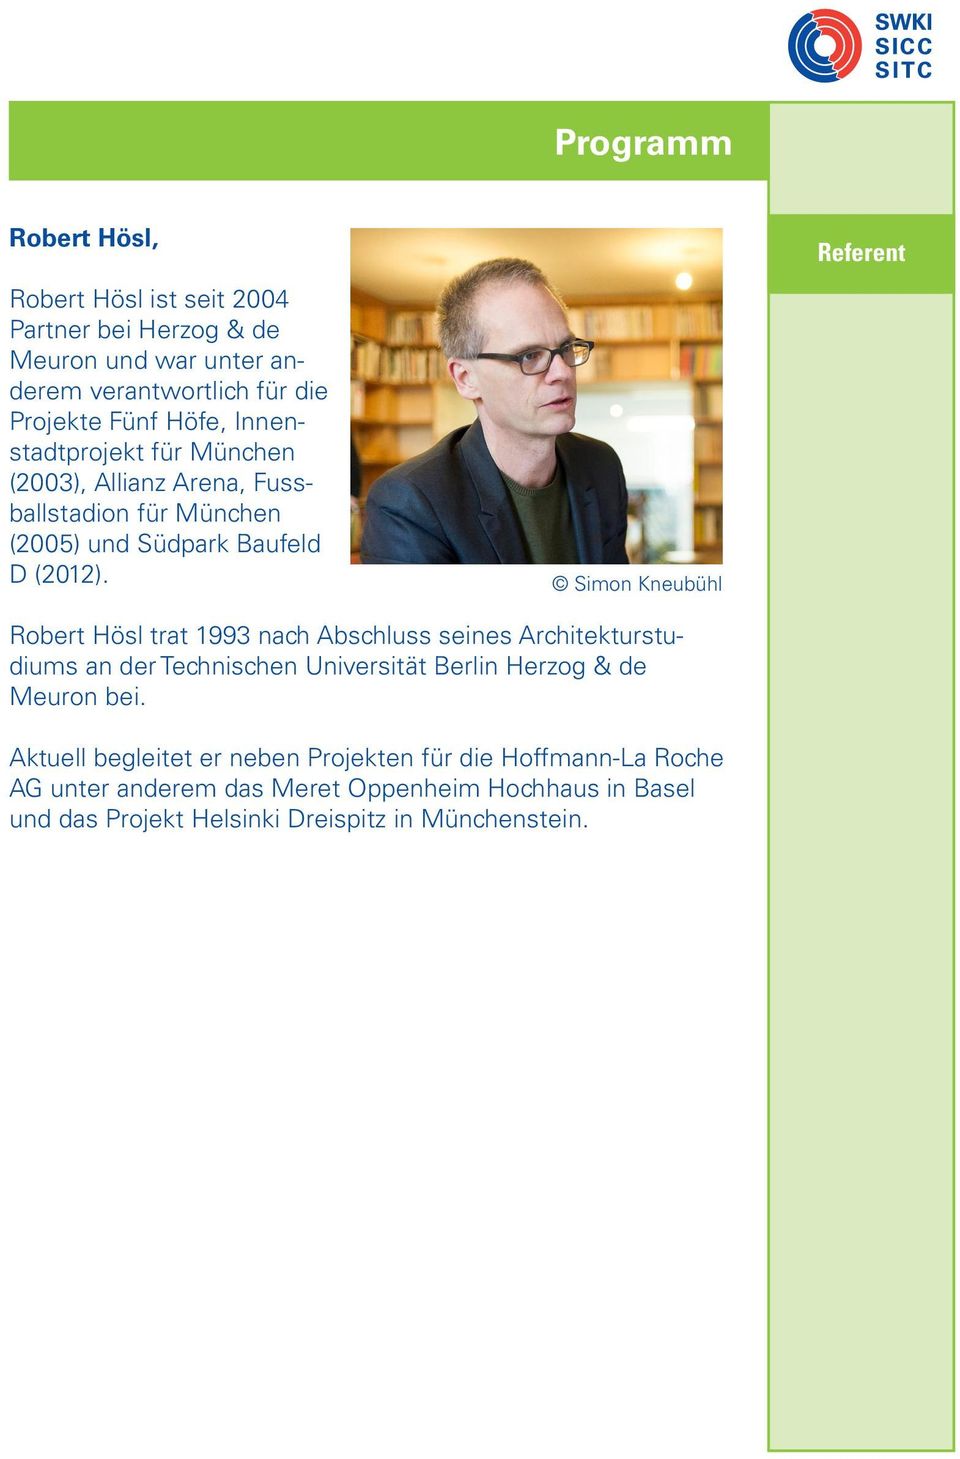 Simon Kneubühl Referent Robert Hösl trat 1993 nach Abschluss seines Architekturstudiums an der Technischen Universität Berlin Herzog & de Meuron